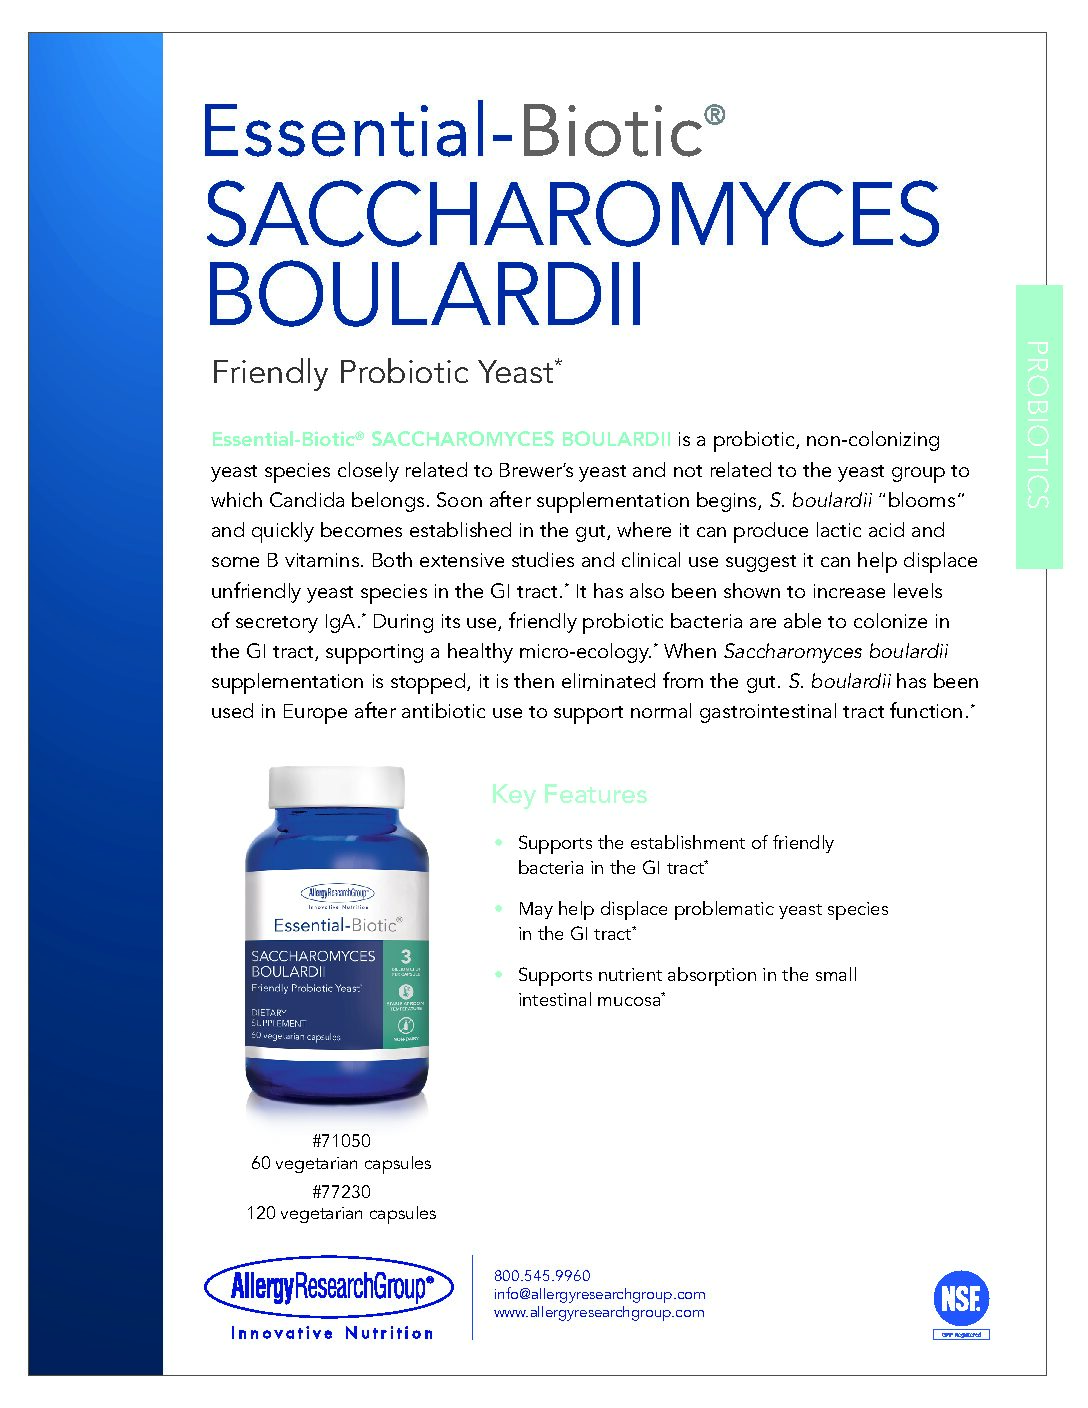 Allergy Research Group Essential-Biotic Saccharomyces Boulardii